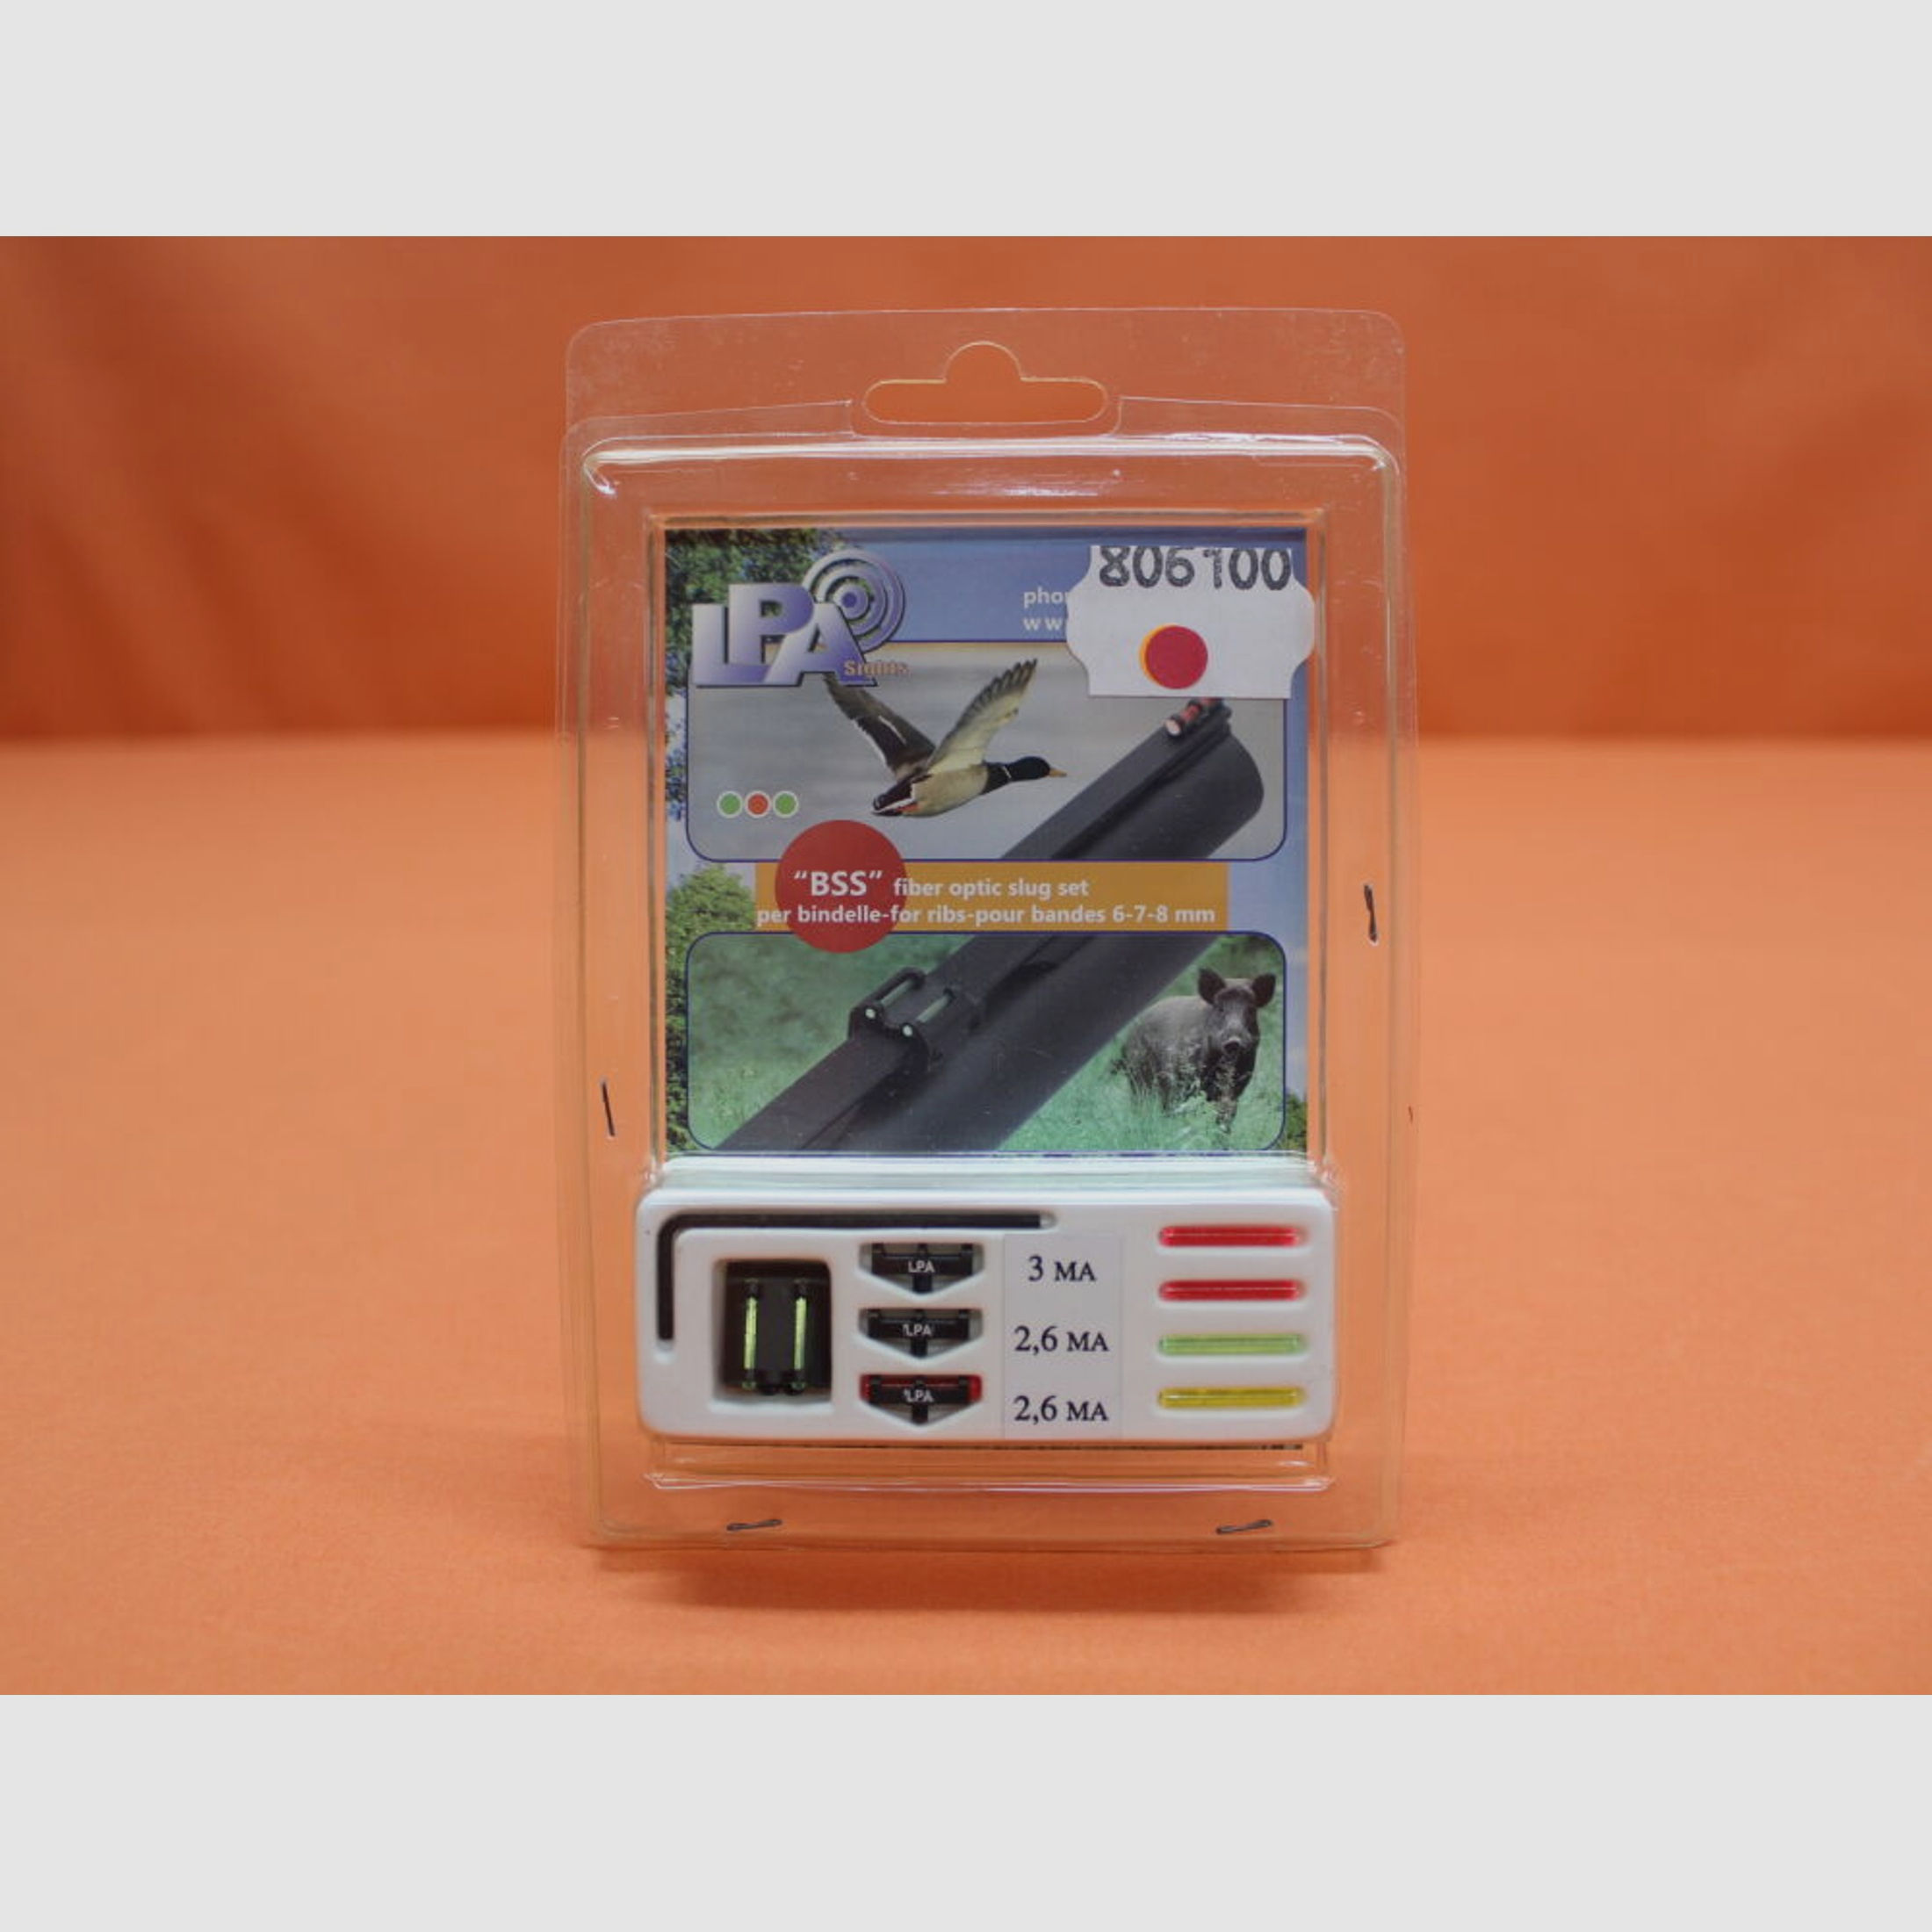 LPA.	 LPA Fiber-Optic Slug Set (BSS) für Flinten: aufklemmbare Fiber-Optic Kimme für Laufschienen 6-8mm